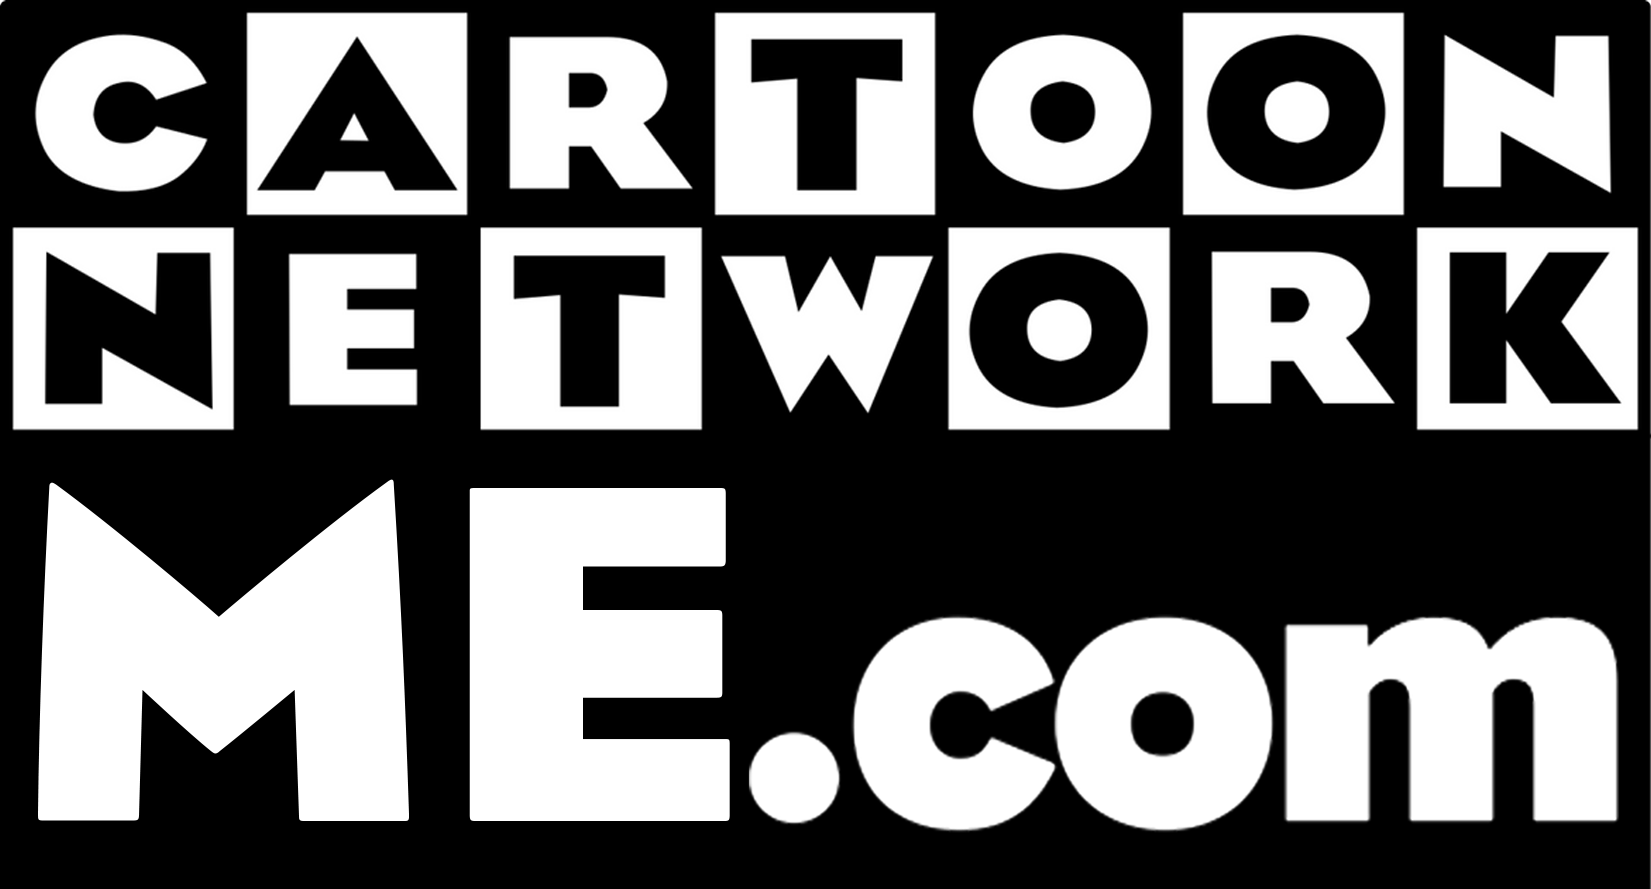 Cartoon Network old Middle East website logo by DannyD1997 on DeviantArt